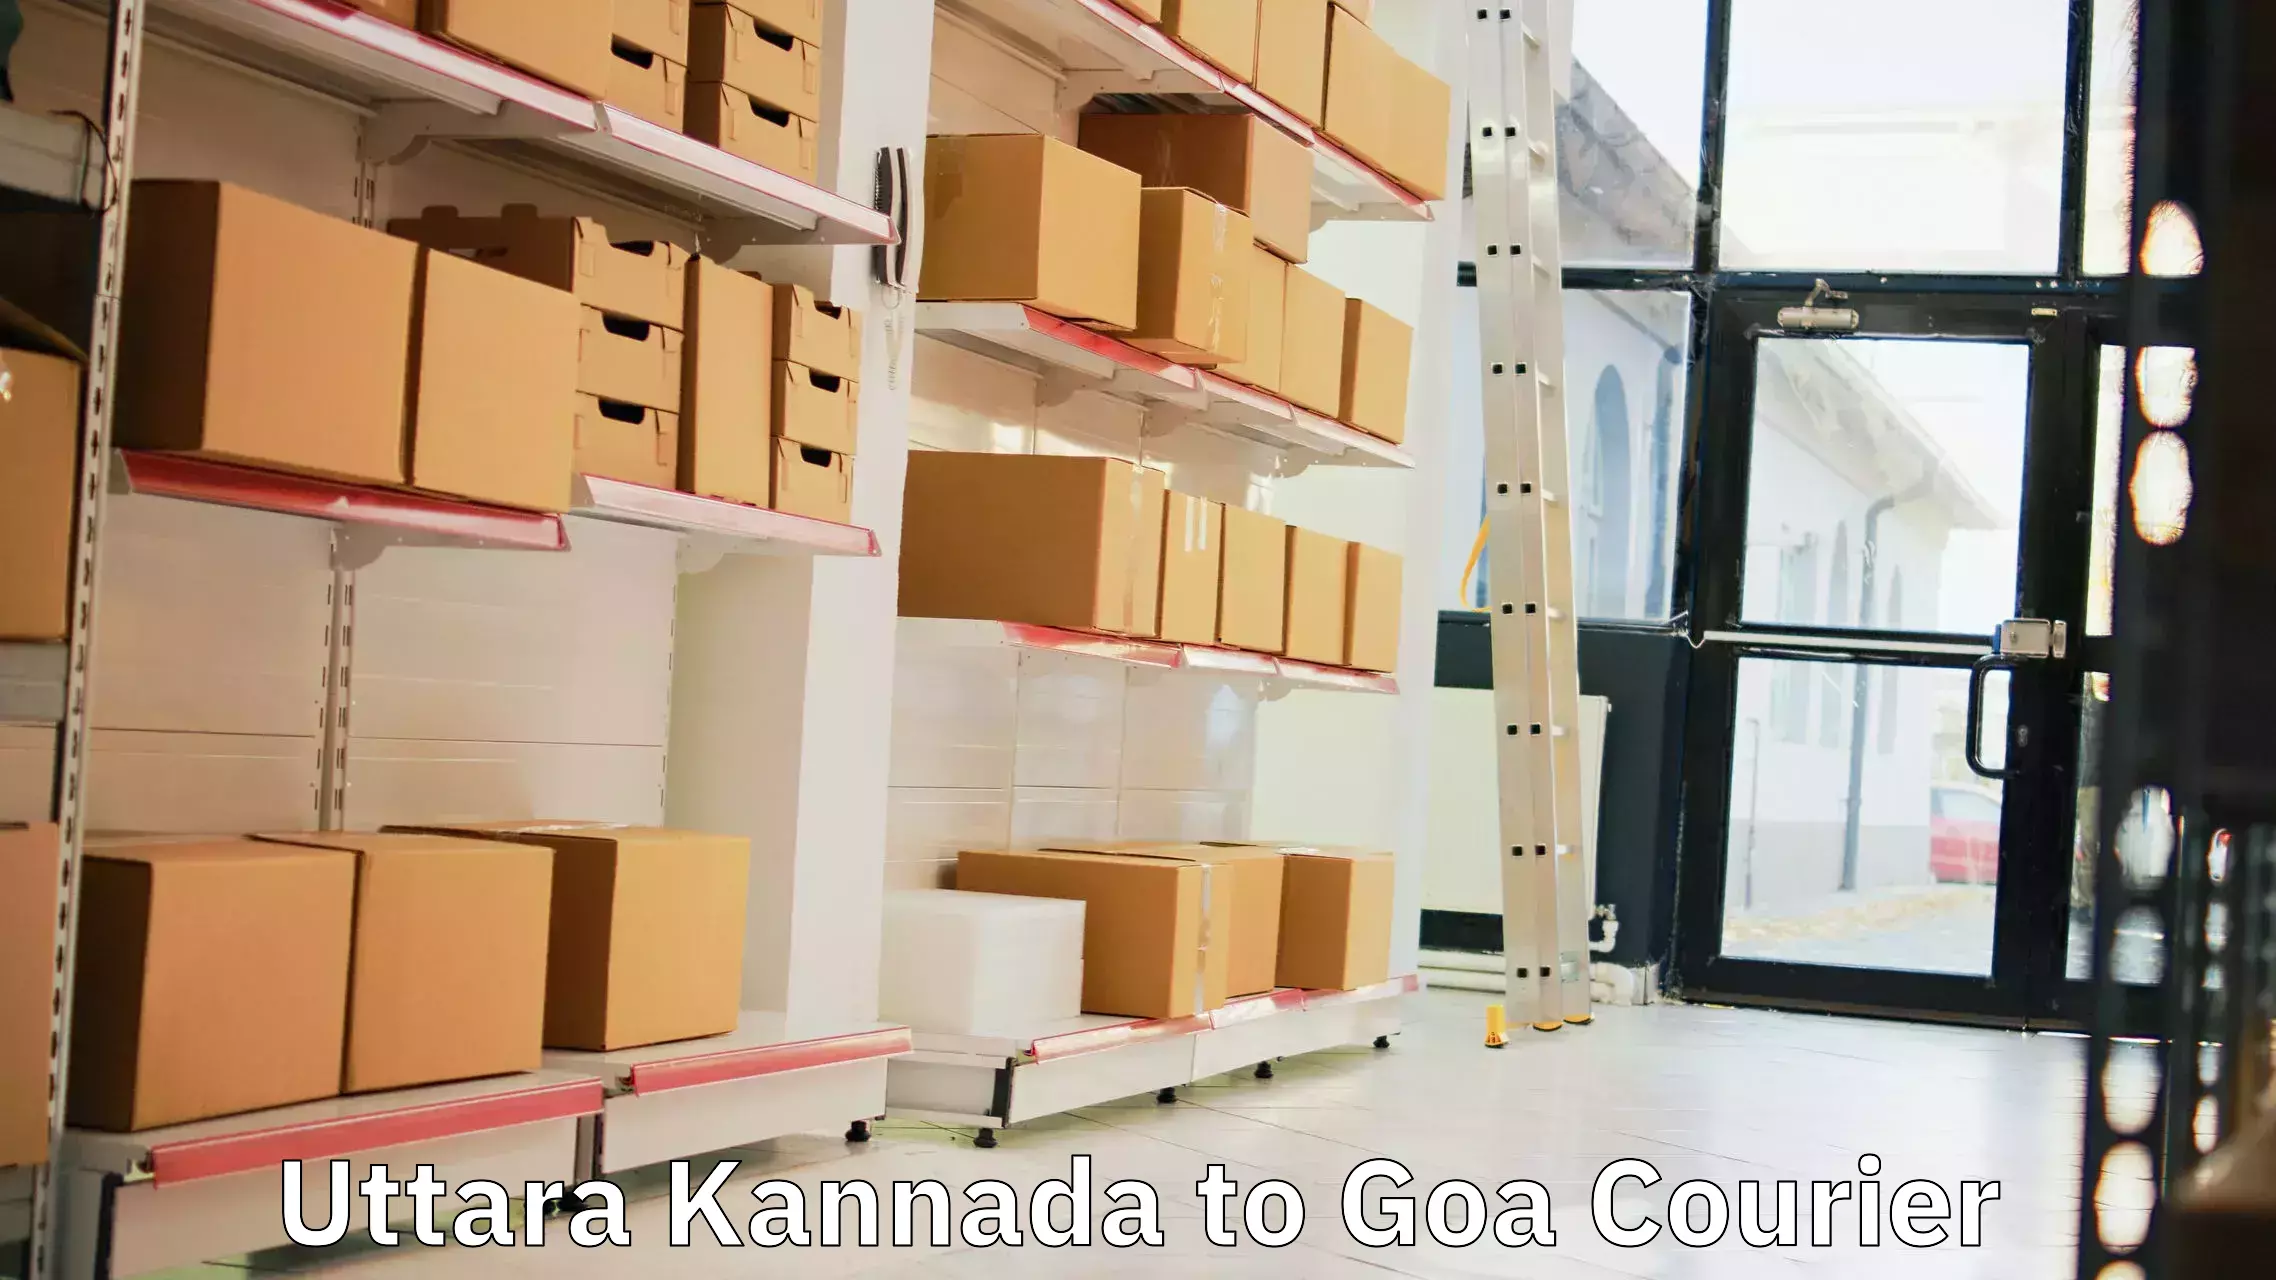 Local delivery service Uttara Kannada to Goa